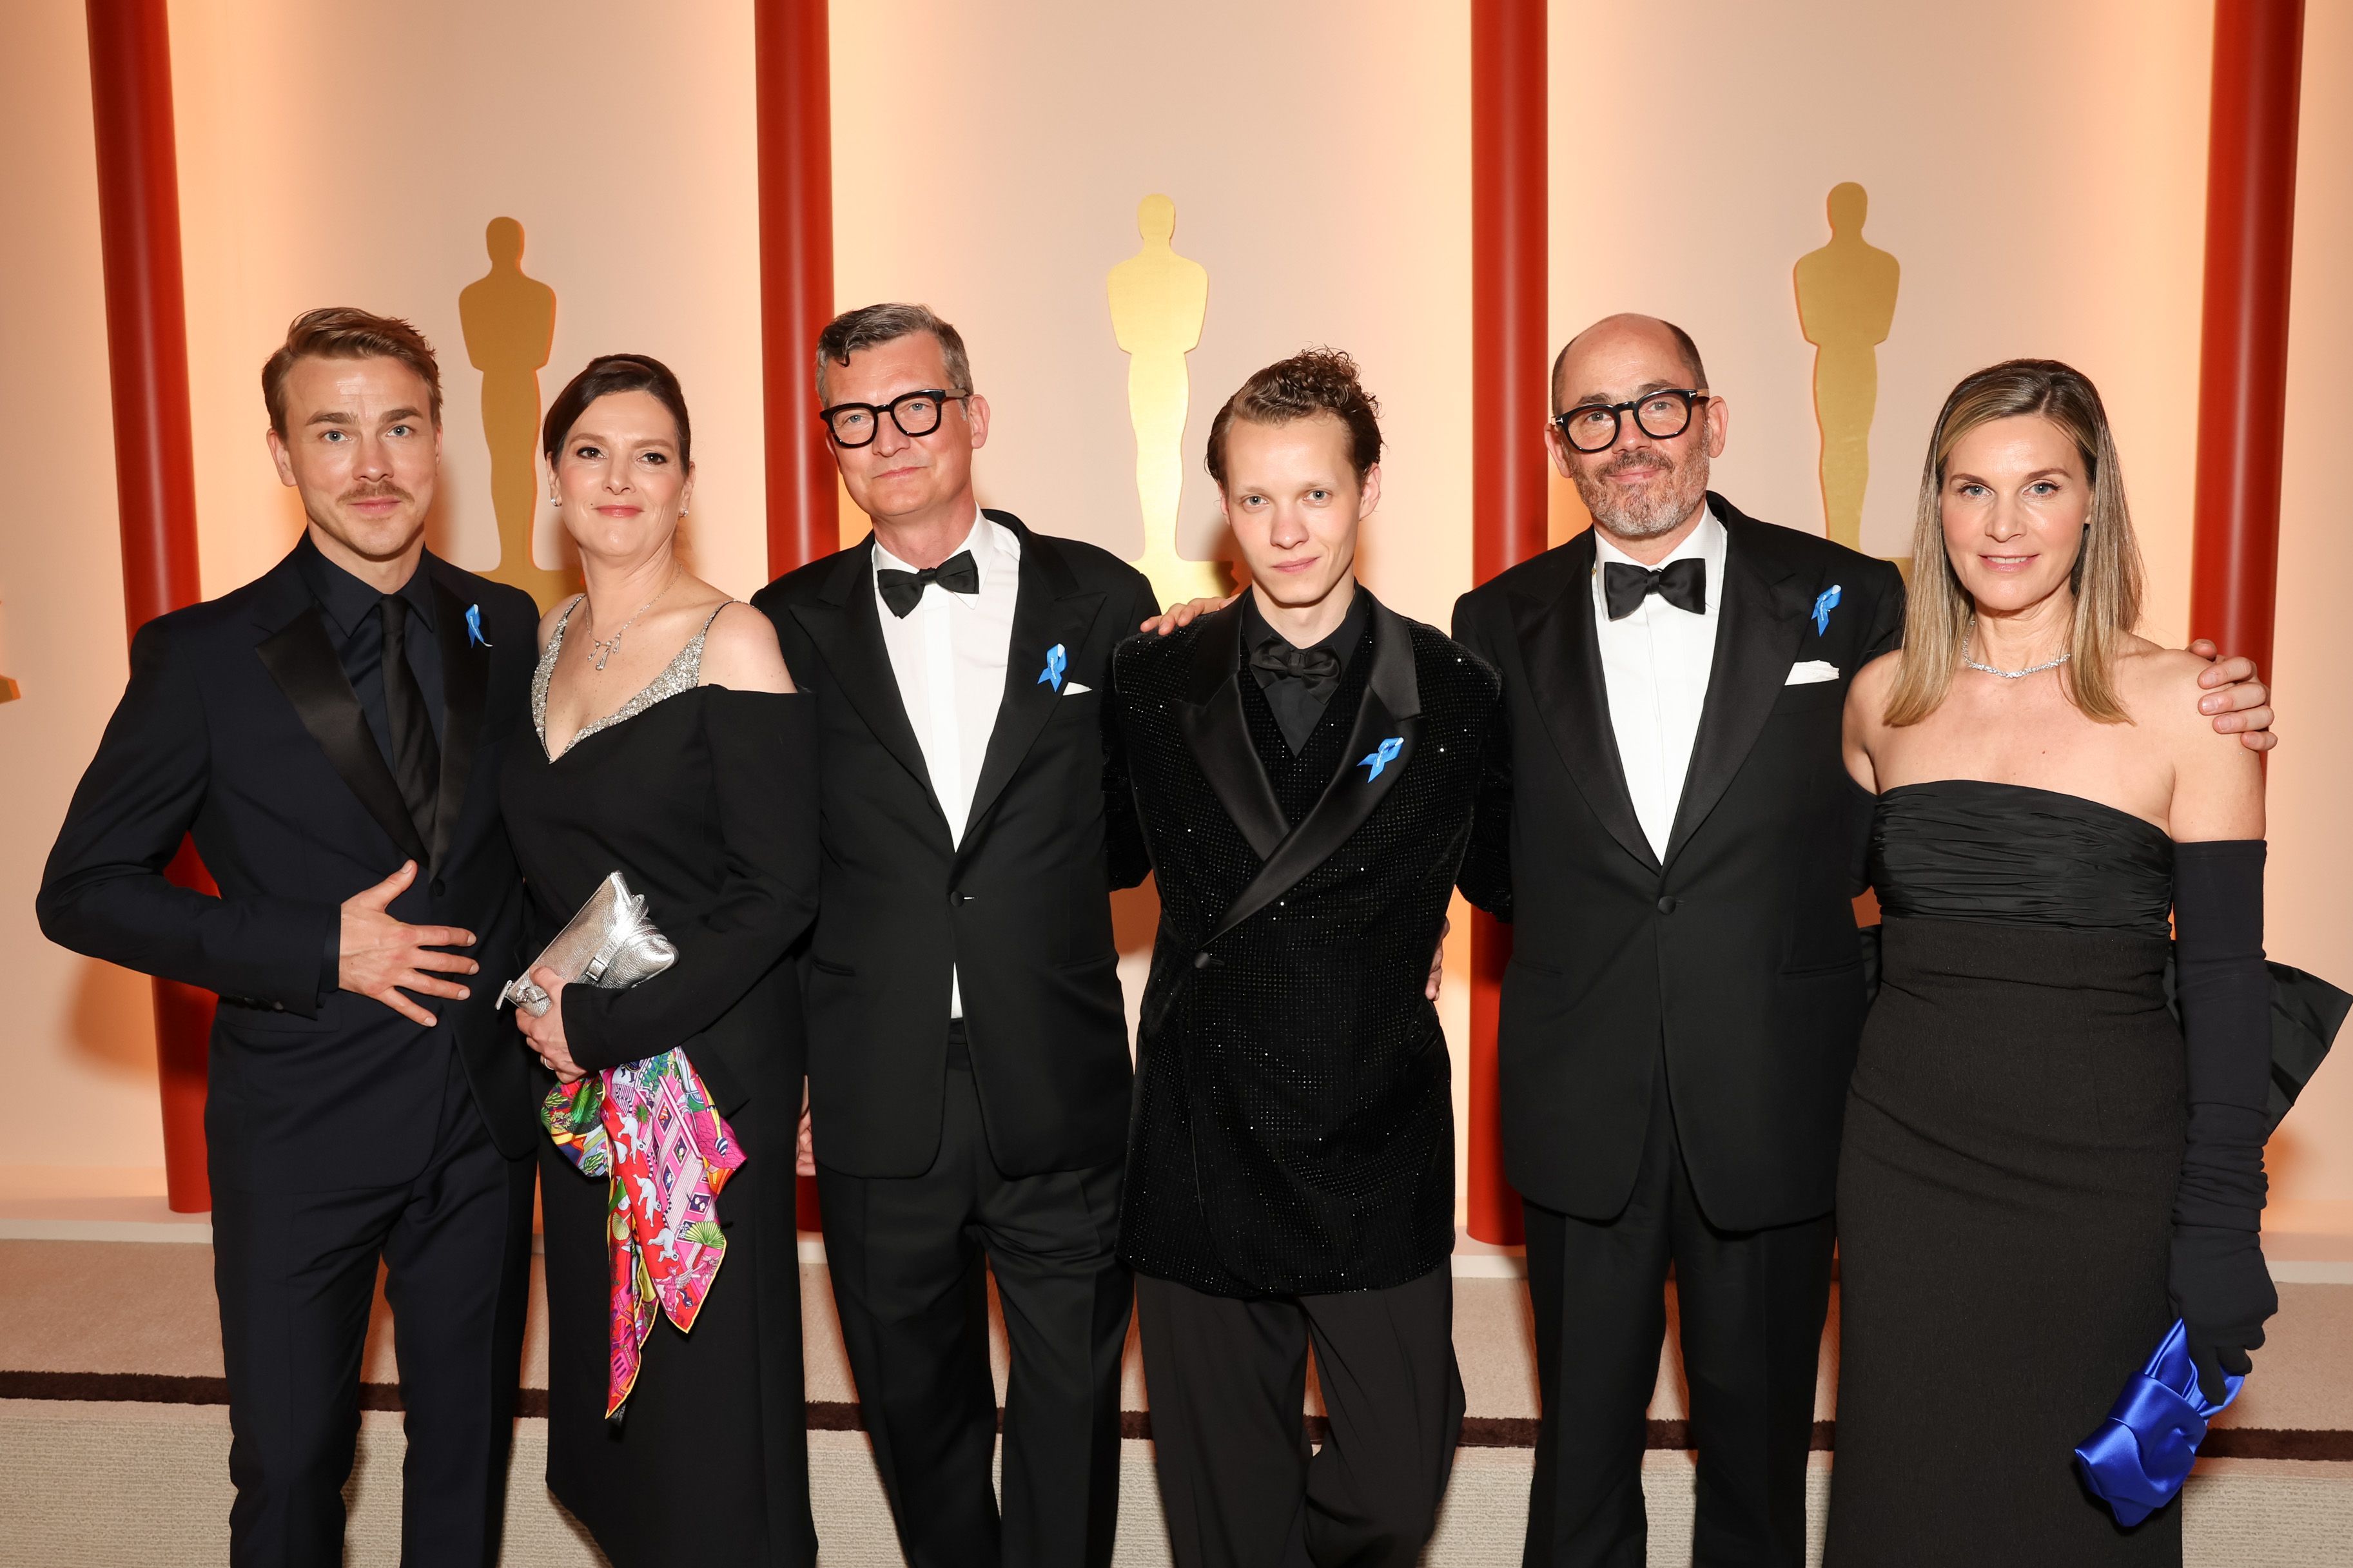 Felix Kammerer (Mitte) begeistert im Pailettenlook bei der Oscarverleihung 2023